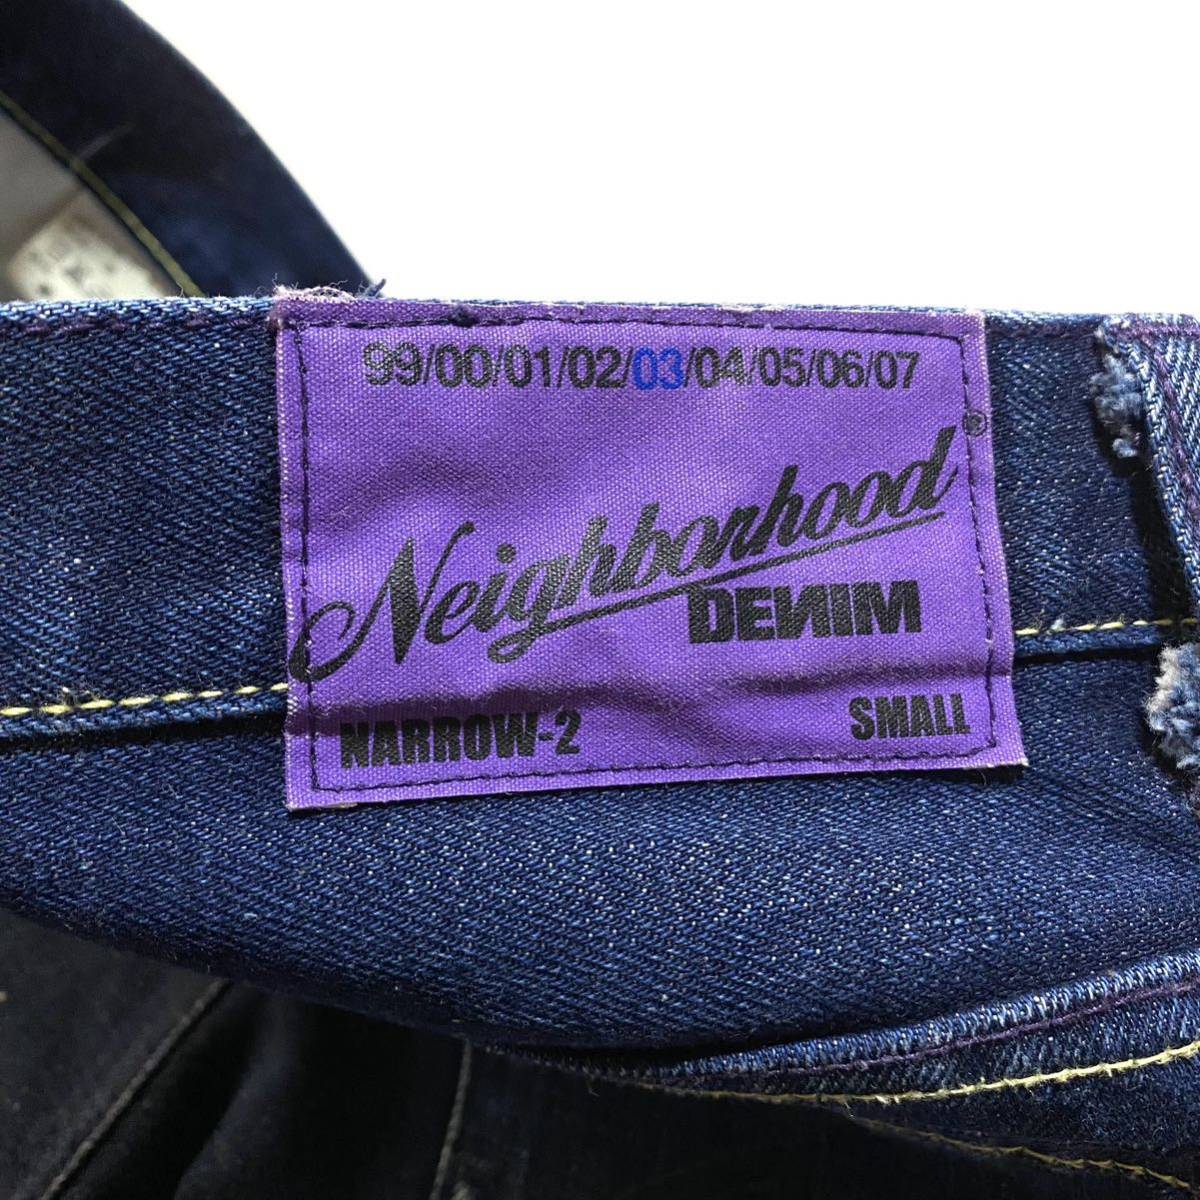 NEIGHBORHOOD ネイバーフッド NARROW-2 セミフレア デニム パンツ ジーンズ サイズS